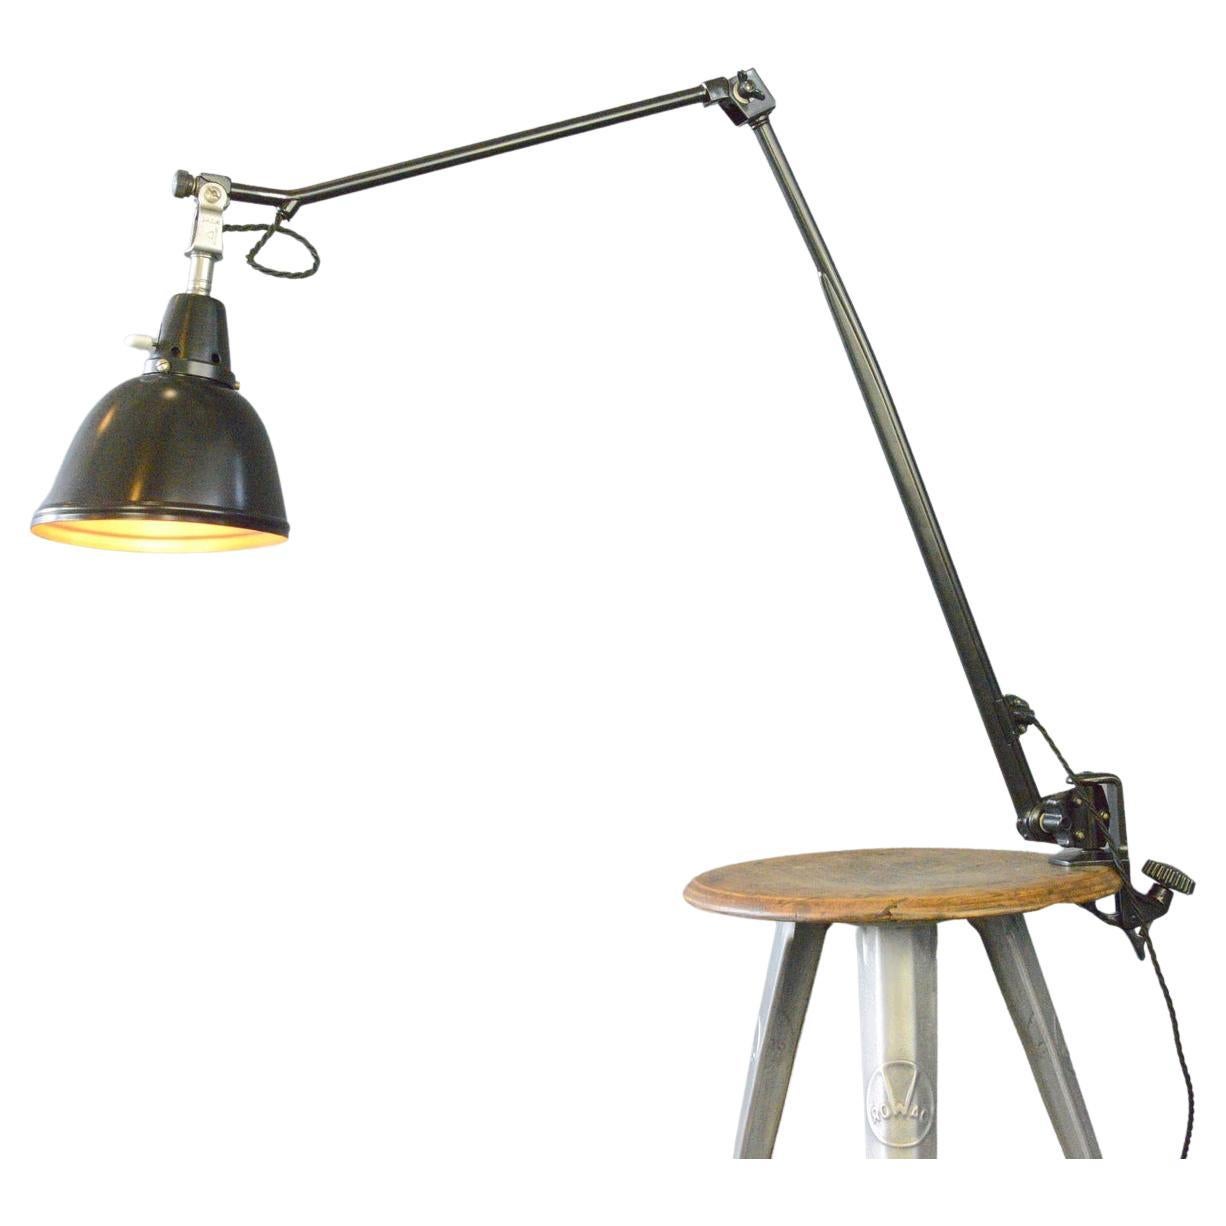 Midgard Typ 114 Table Lamp By Curt Fischer Circa 1930s